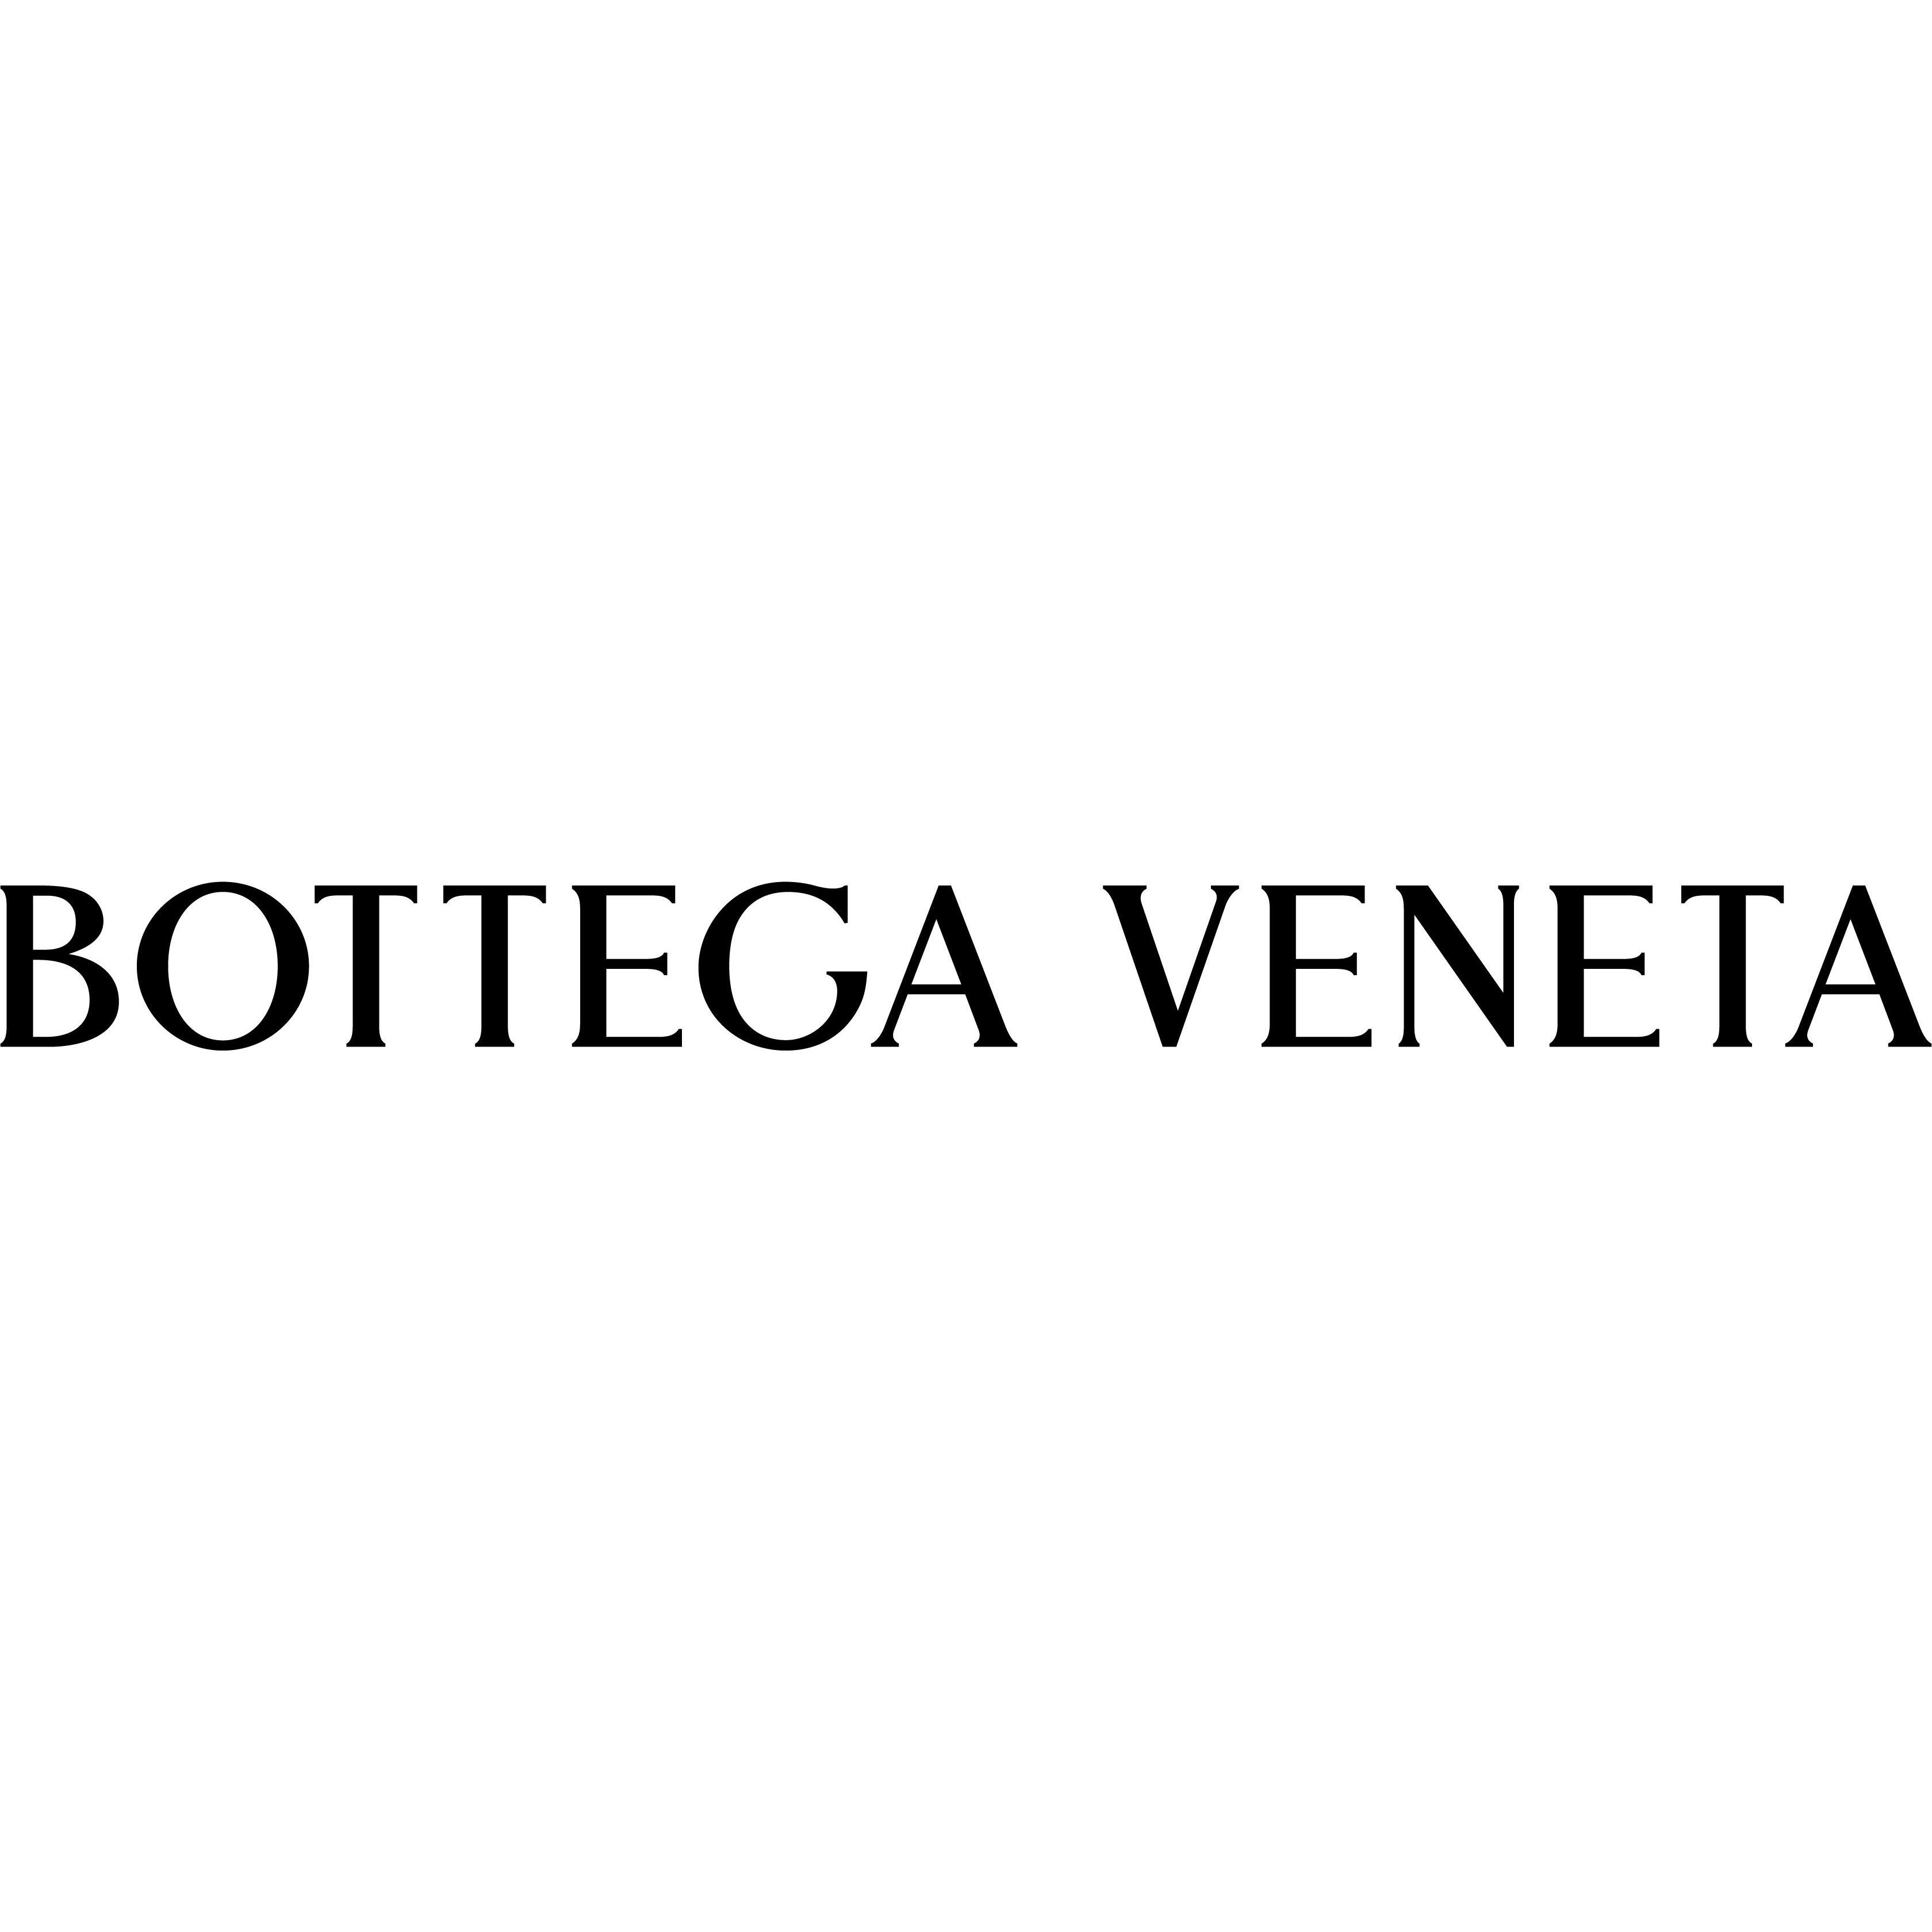 Bottega Veneta - Incheon Lotte